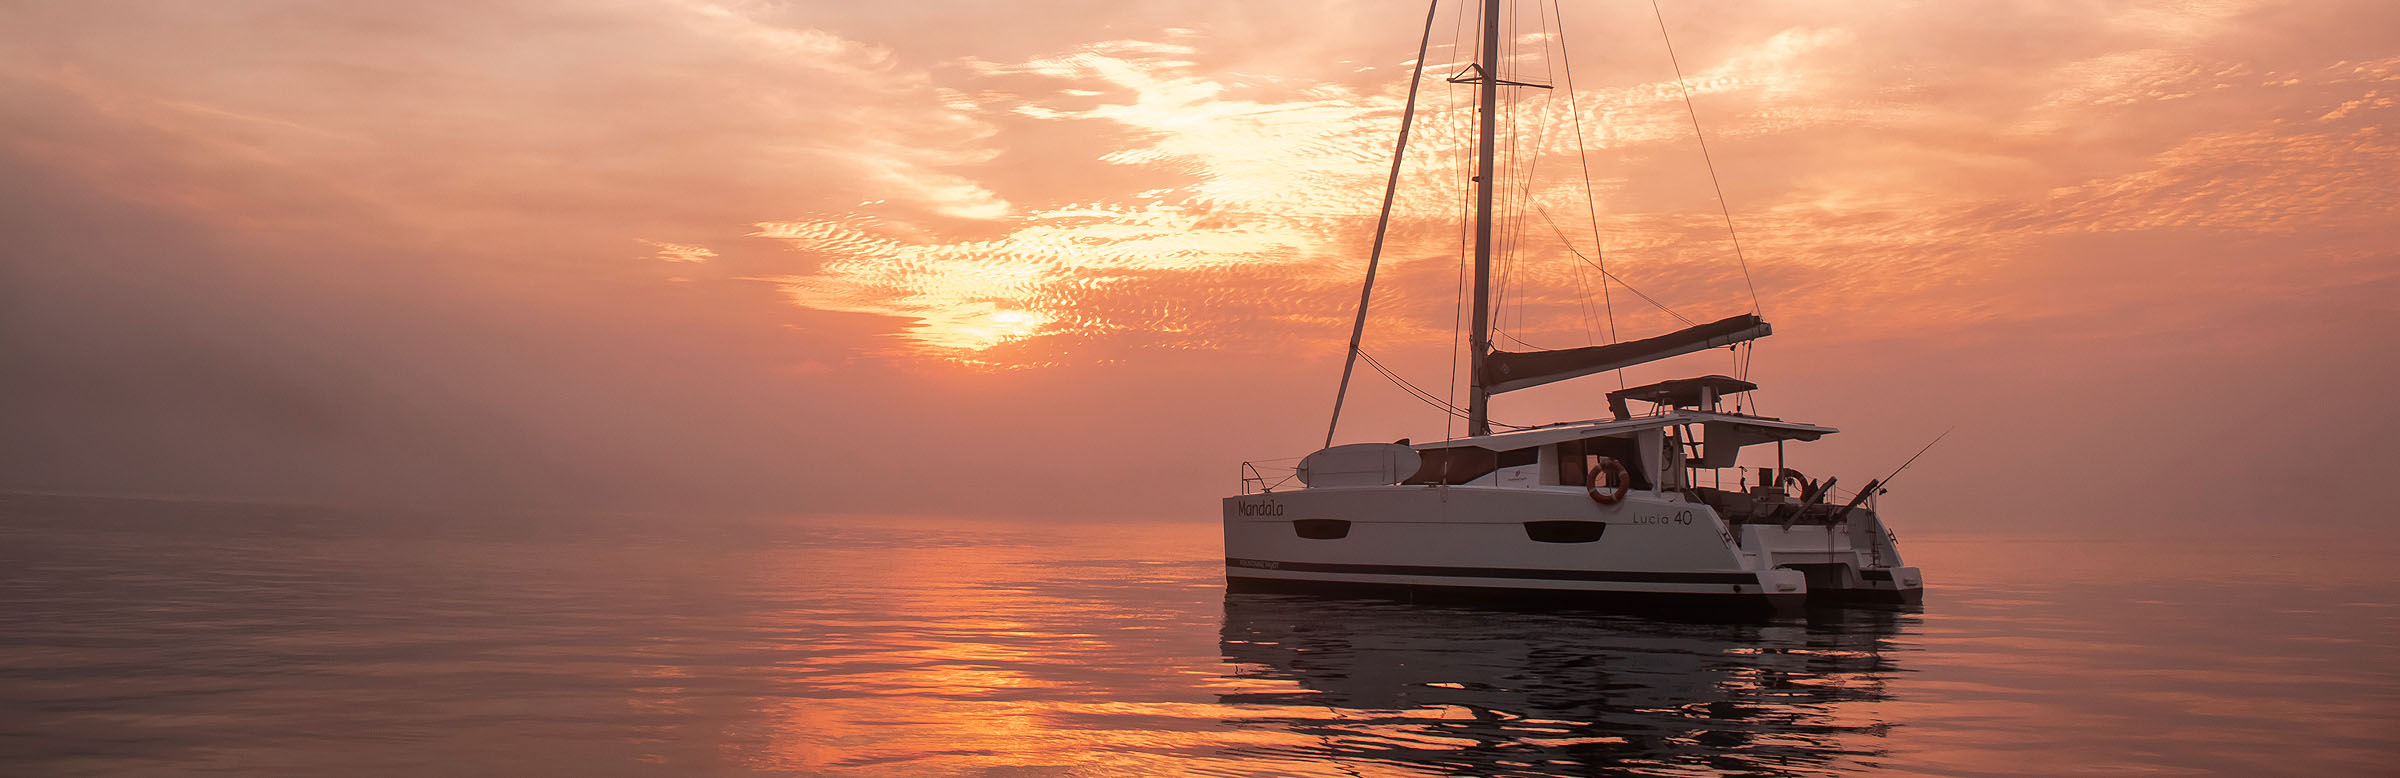 Charter Yachts Australia Whitsunday Islands Sunset